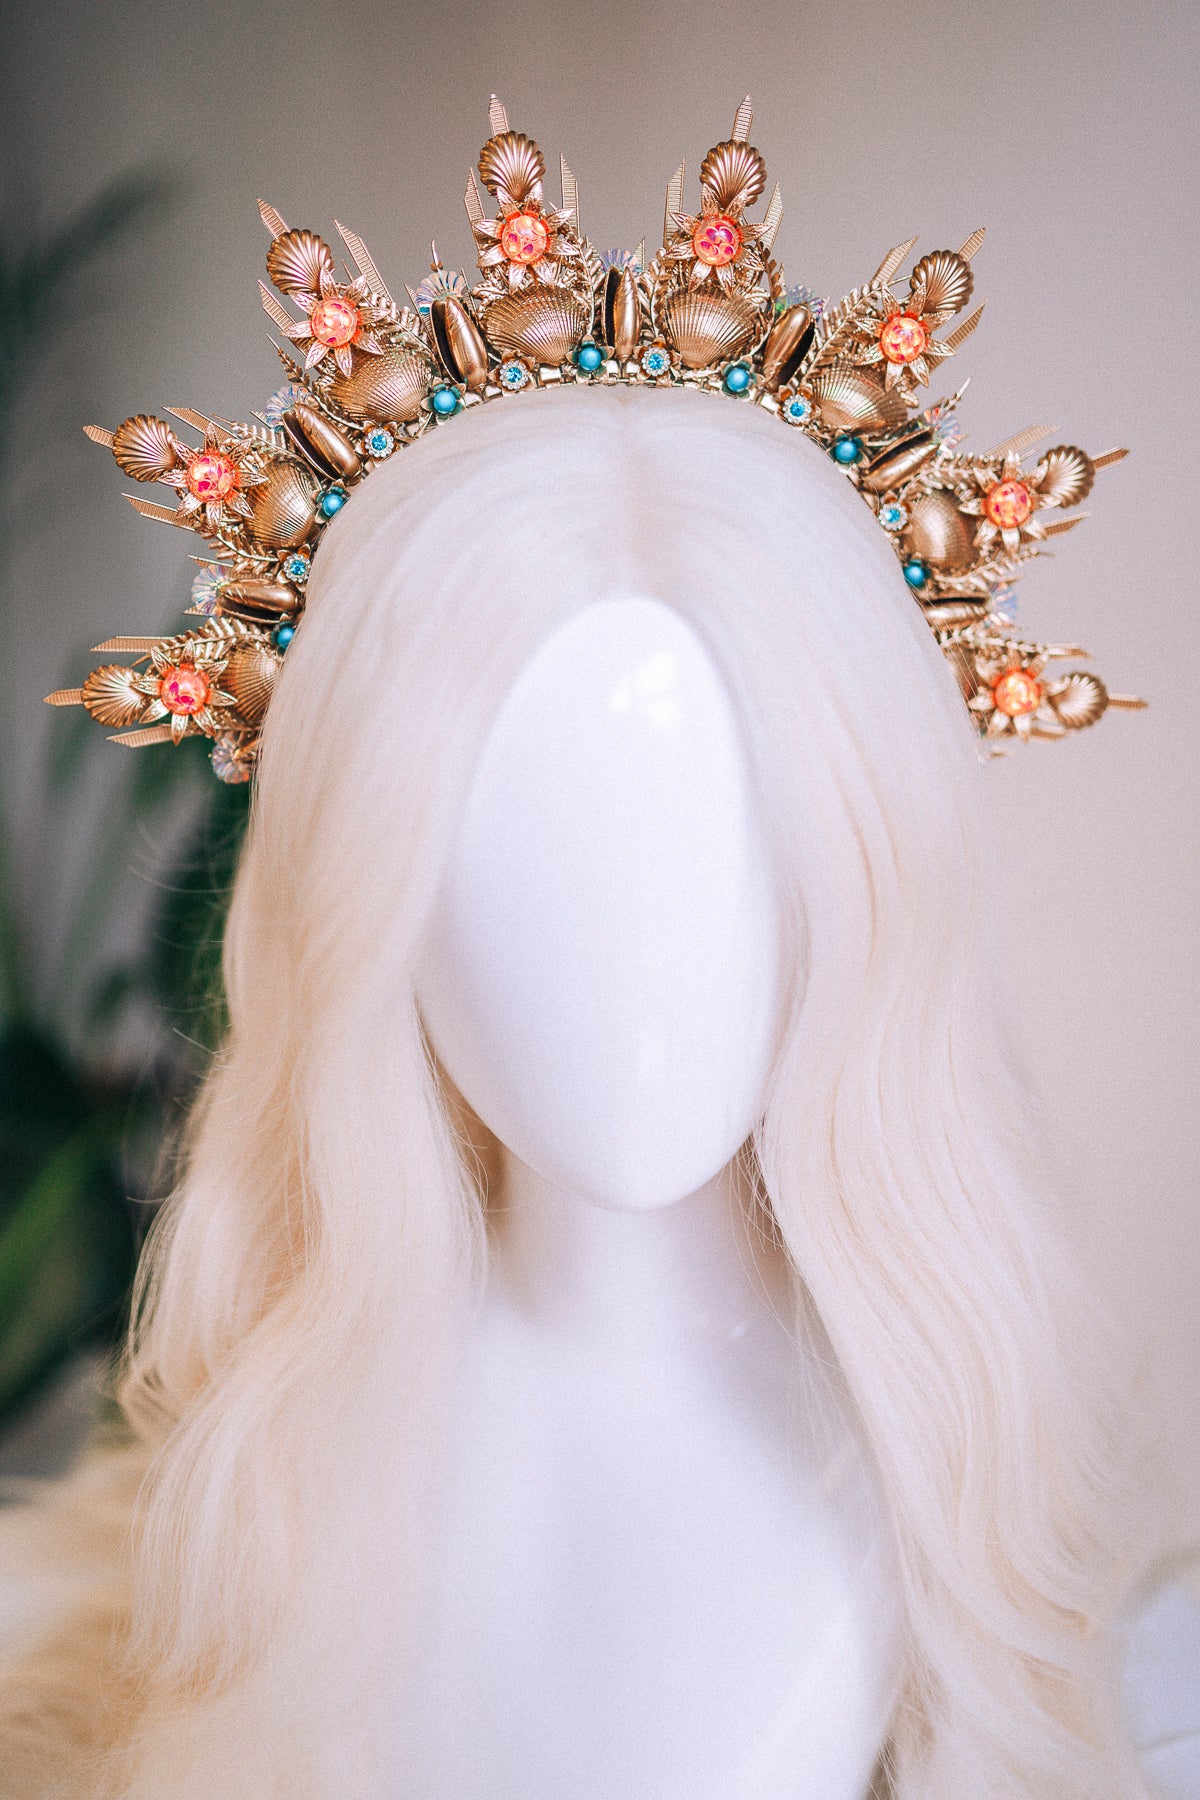 Mermaid Halo Crown Halloween Shell Headpiece